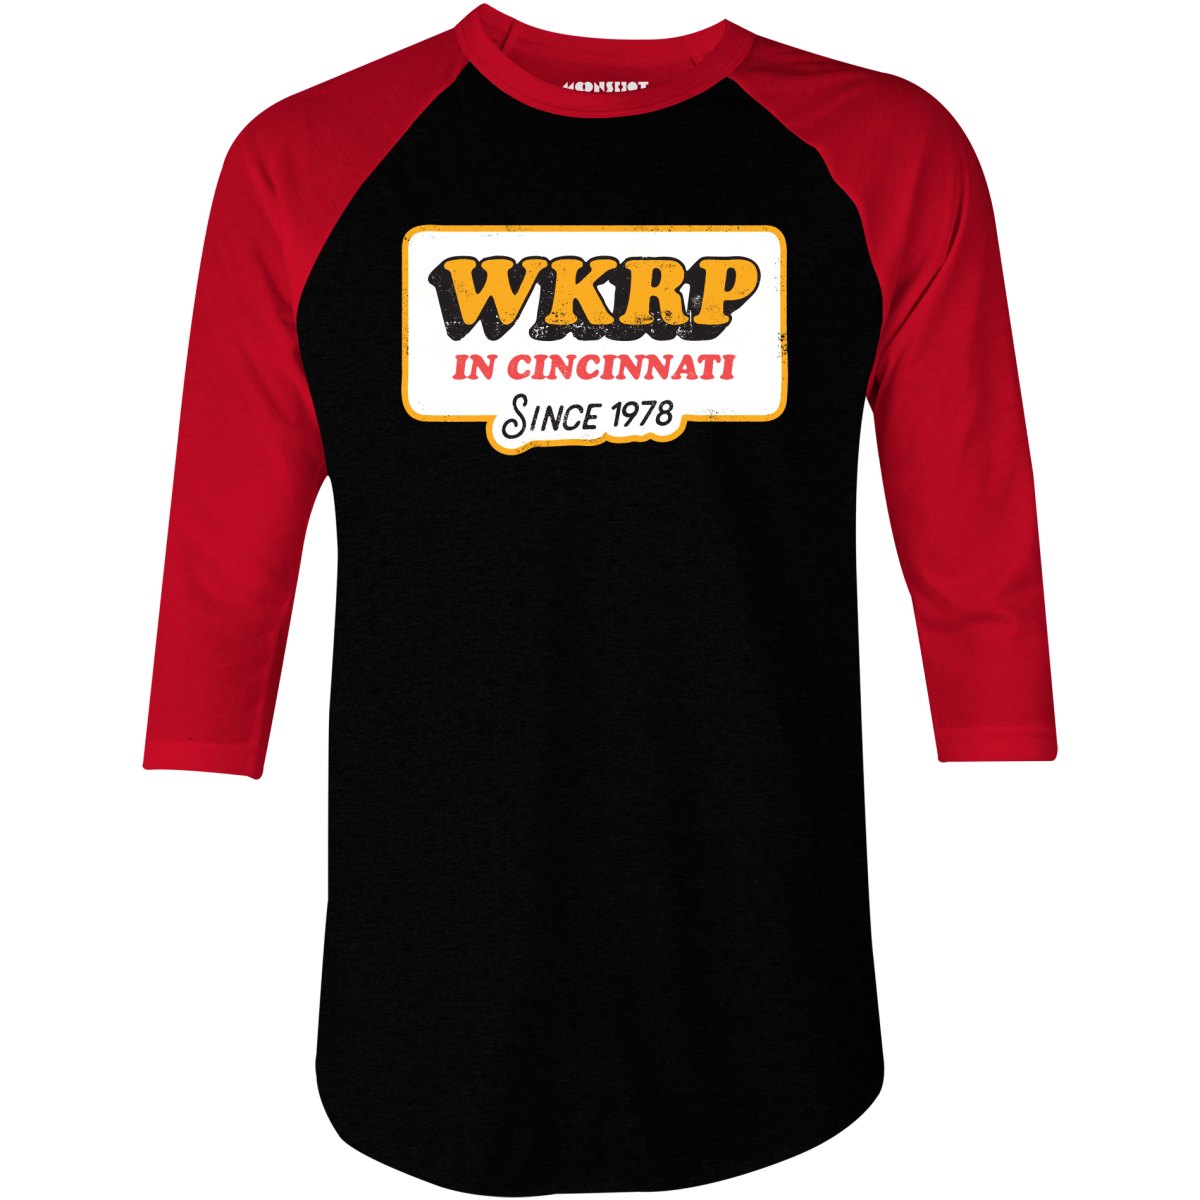 WKRP in Cincinnati - 3/4 Sleeve Raglan T-Shirt